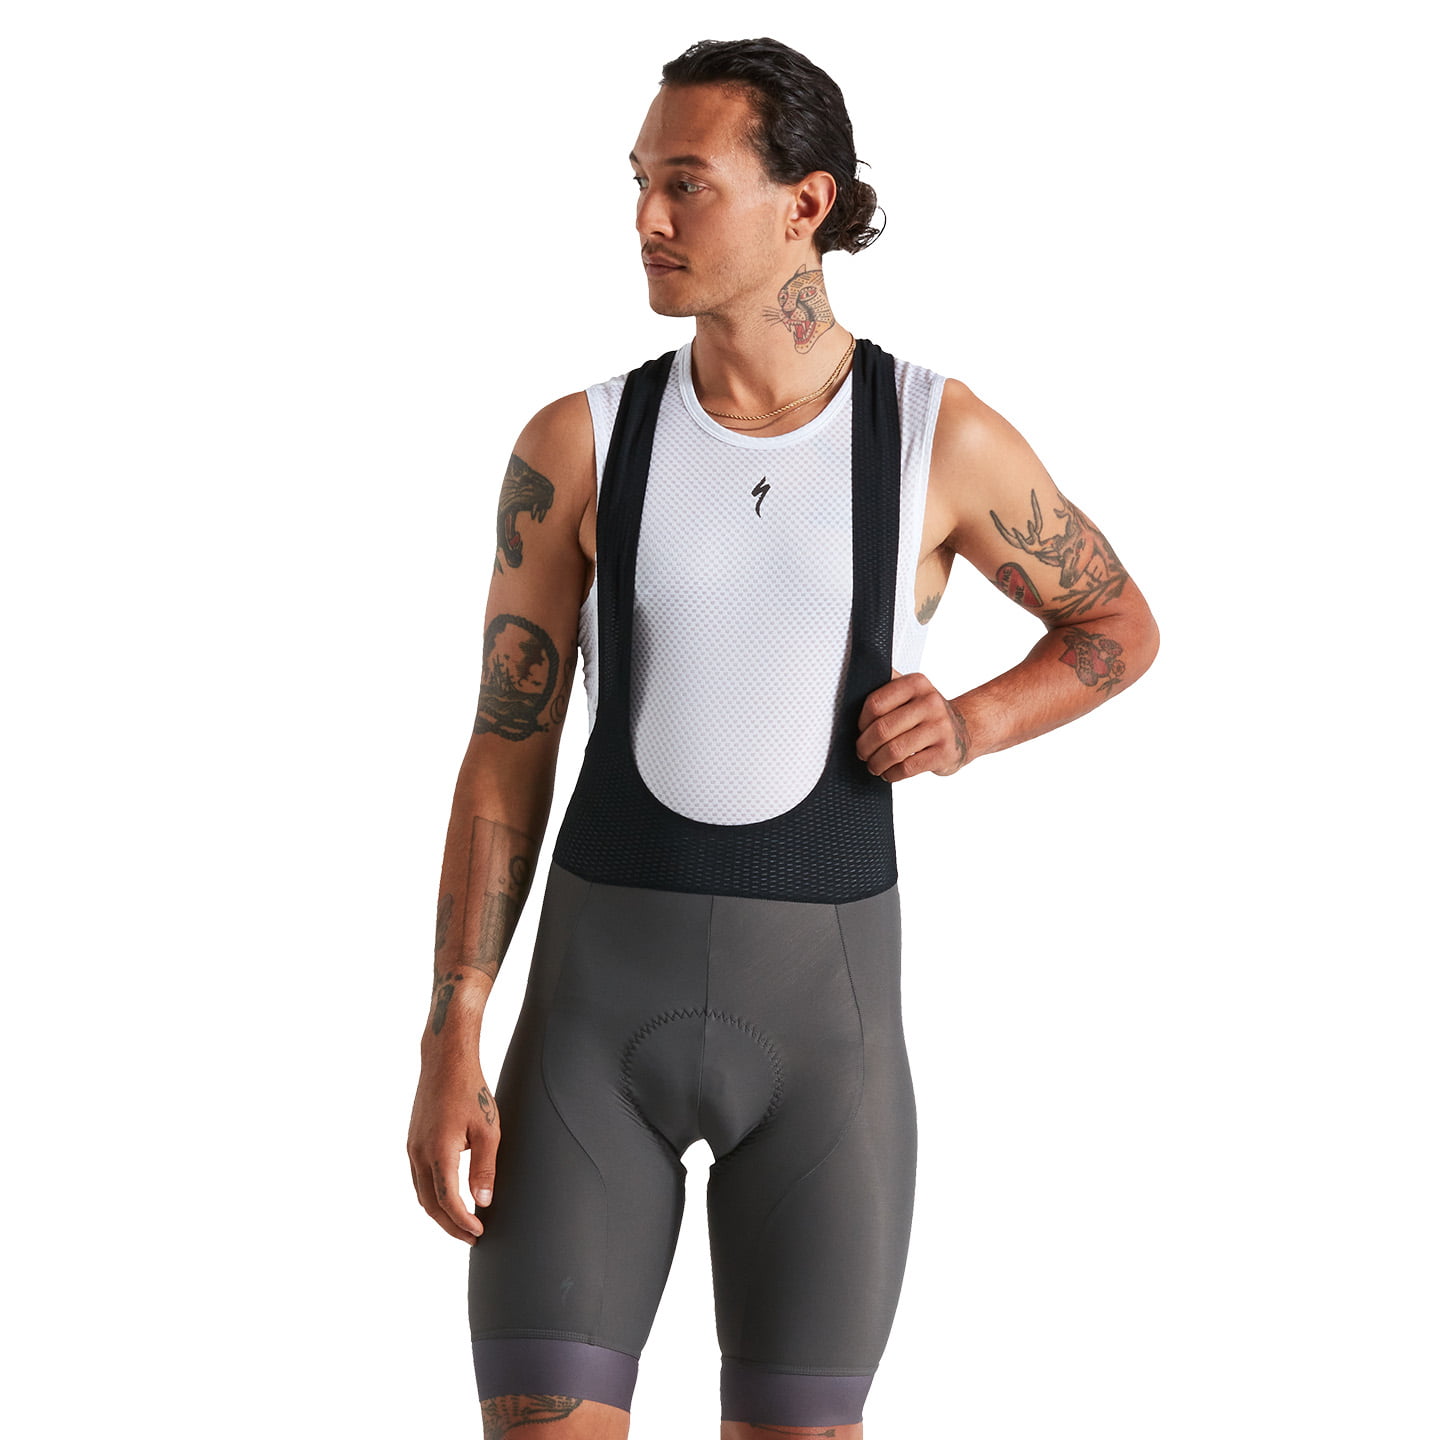 SPECIALIZED SL Bib Shorts Bib Shorts, for men, size 2XL, Cycle shorts, Cycling clothing